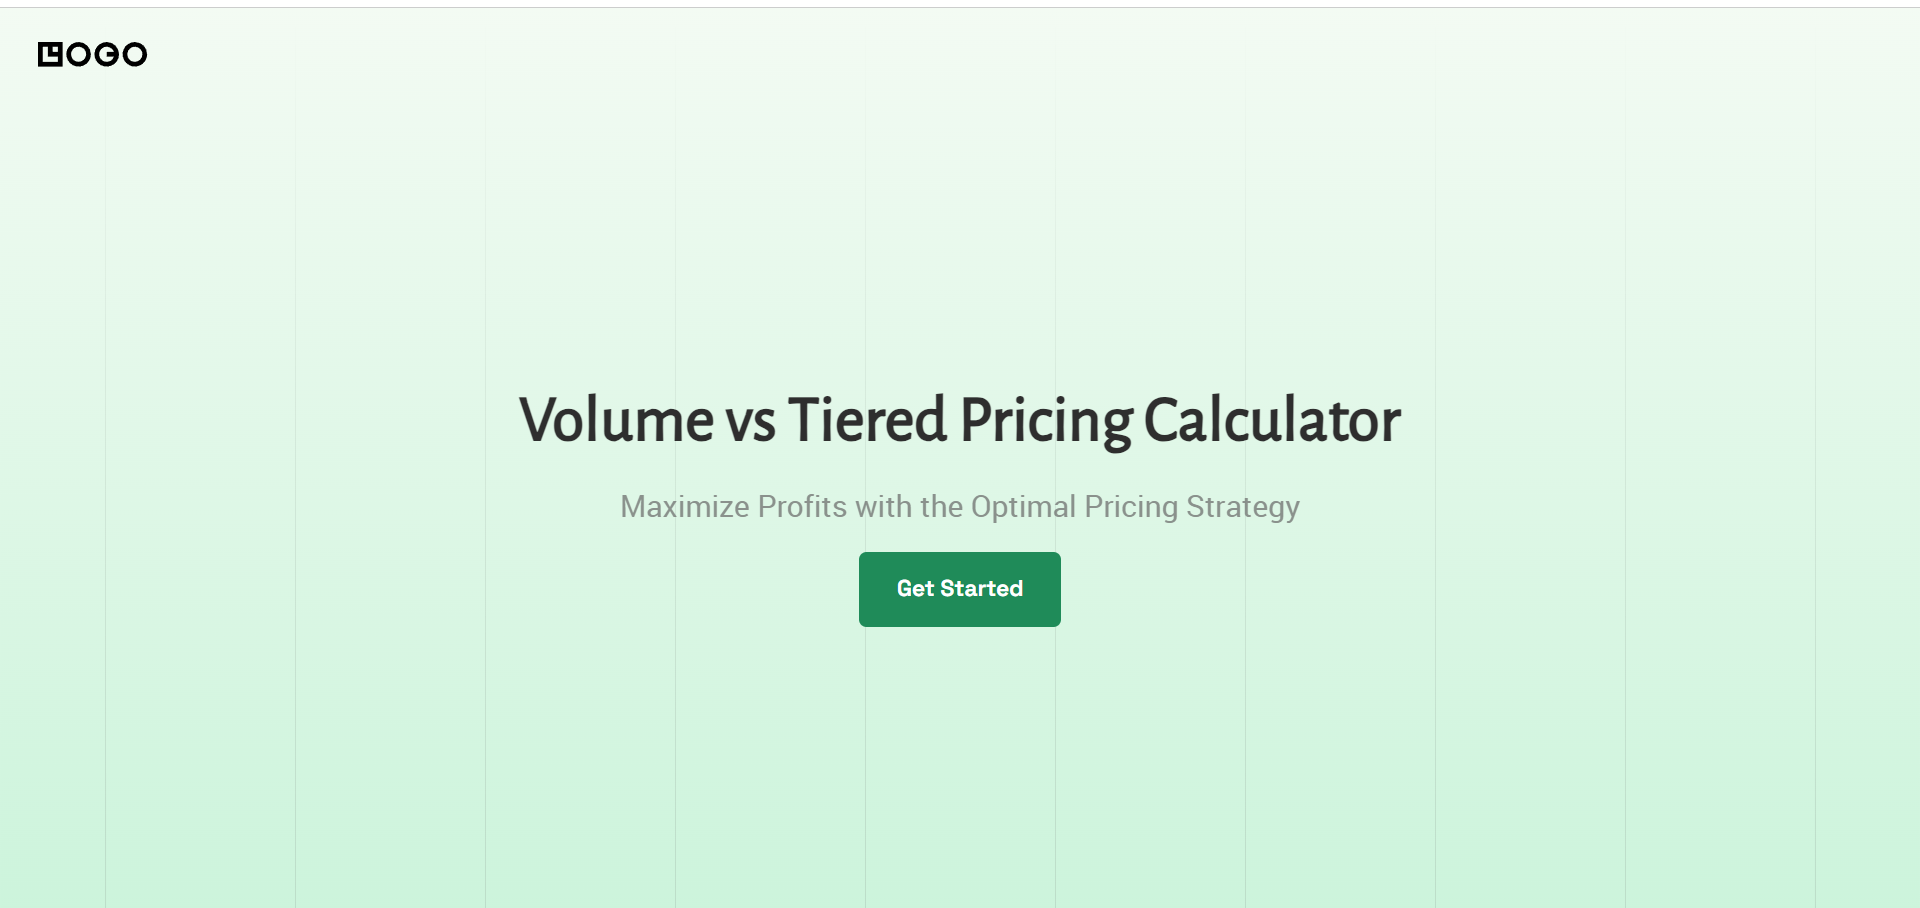 Volume vs Tiered Pricing Calculator